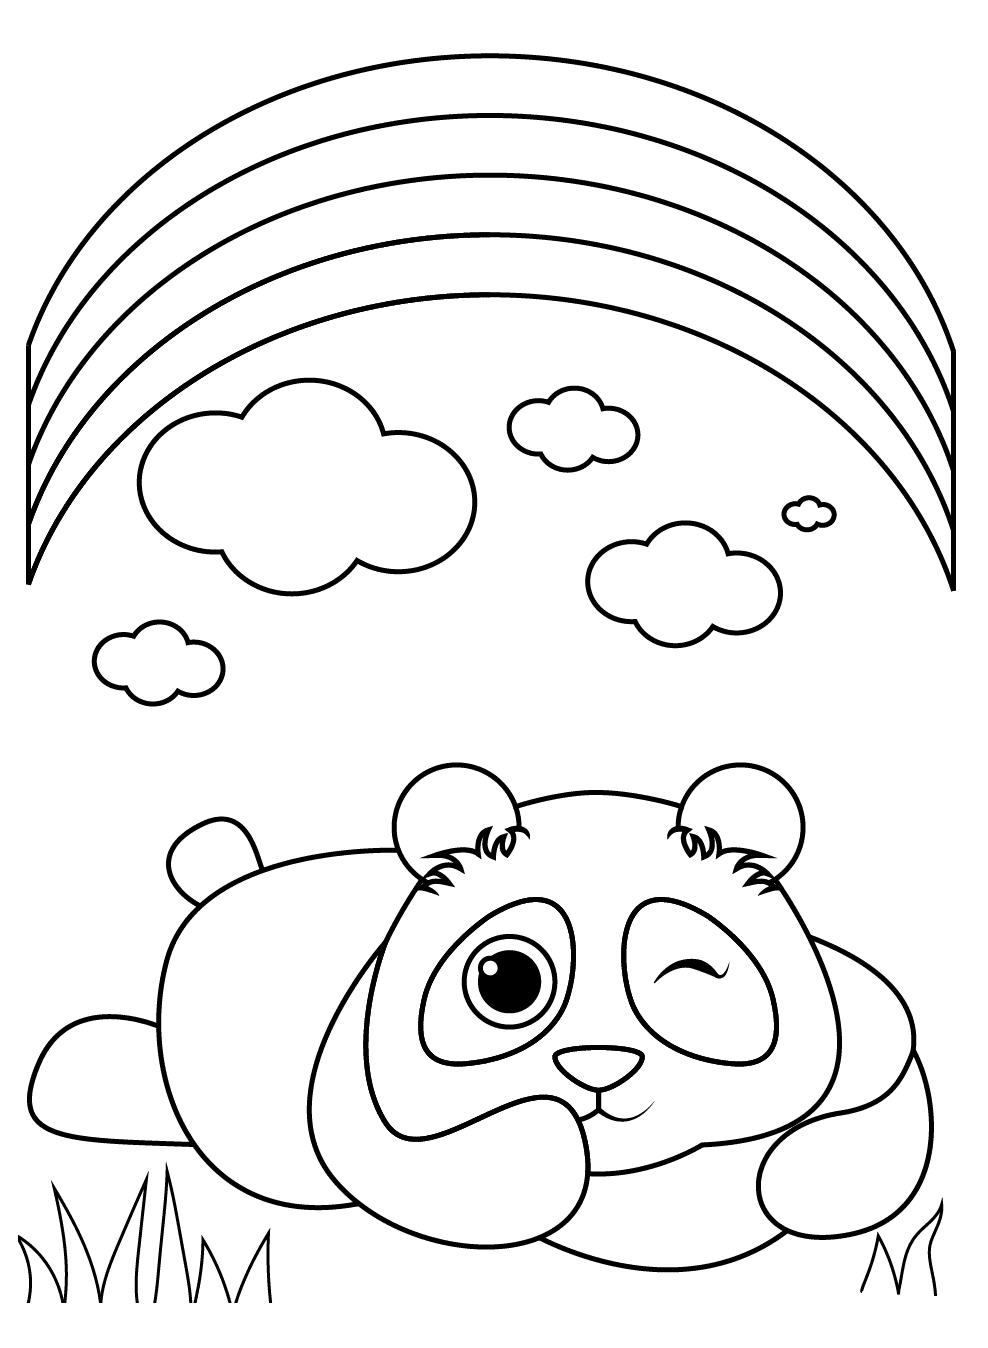 Cute Winking Panda Coloring Page